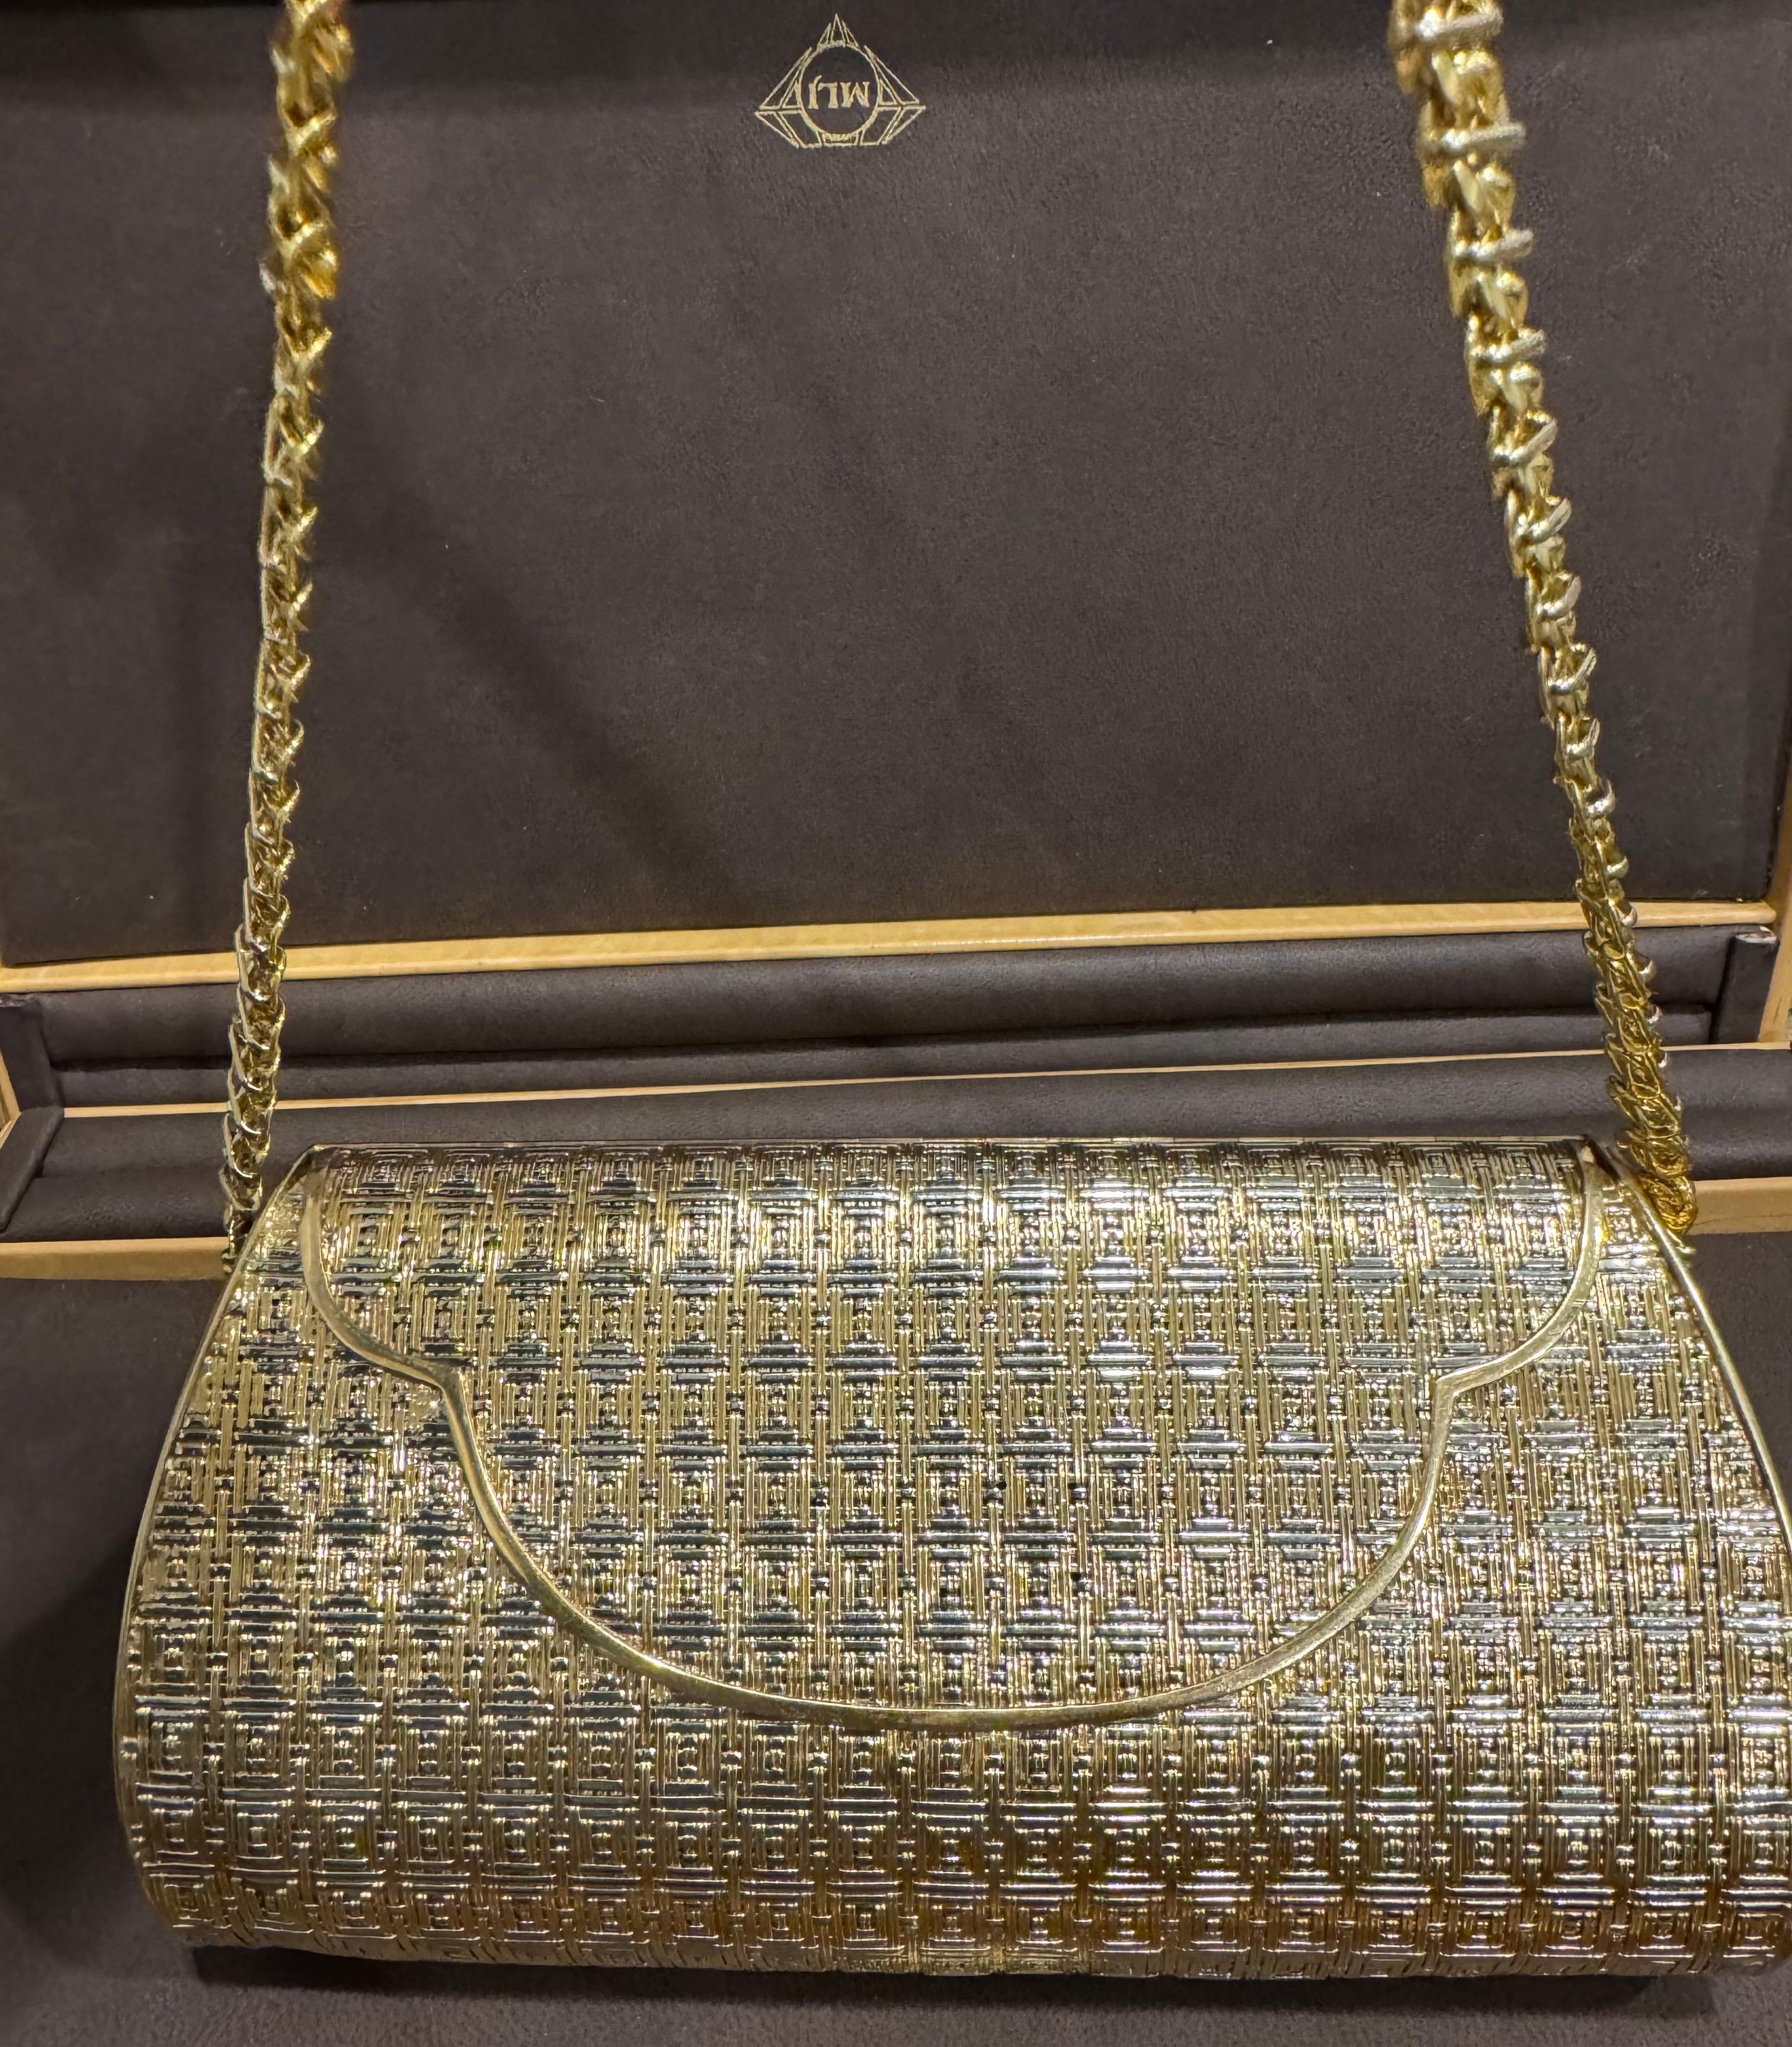  378 Gm of 18 Karat Yellow Gold Mesh Clutch Handbag with Shoulder Chain, Vintage 4